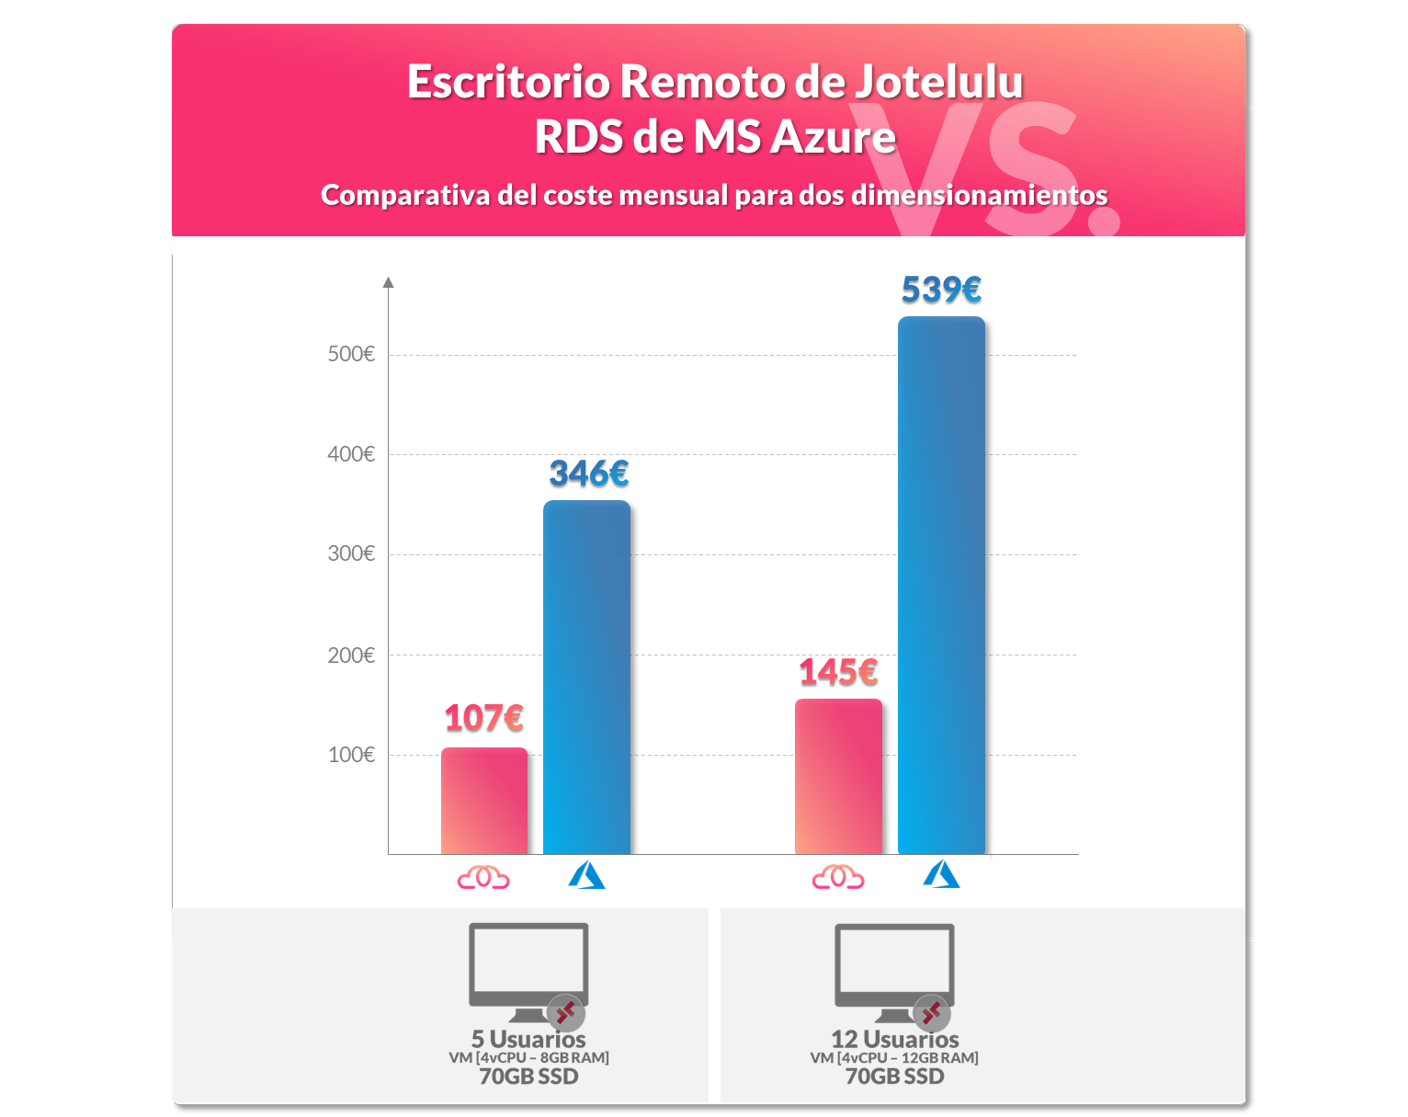 Round 2. Comparativa de precios Escritorio Remoto de Jotelulu vs. RDS de MS Azure